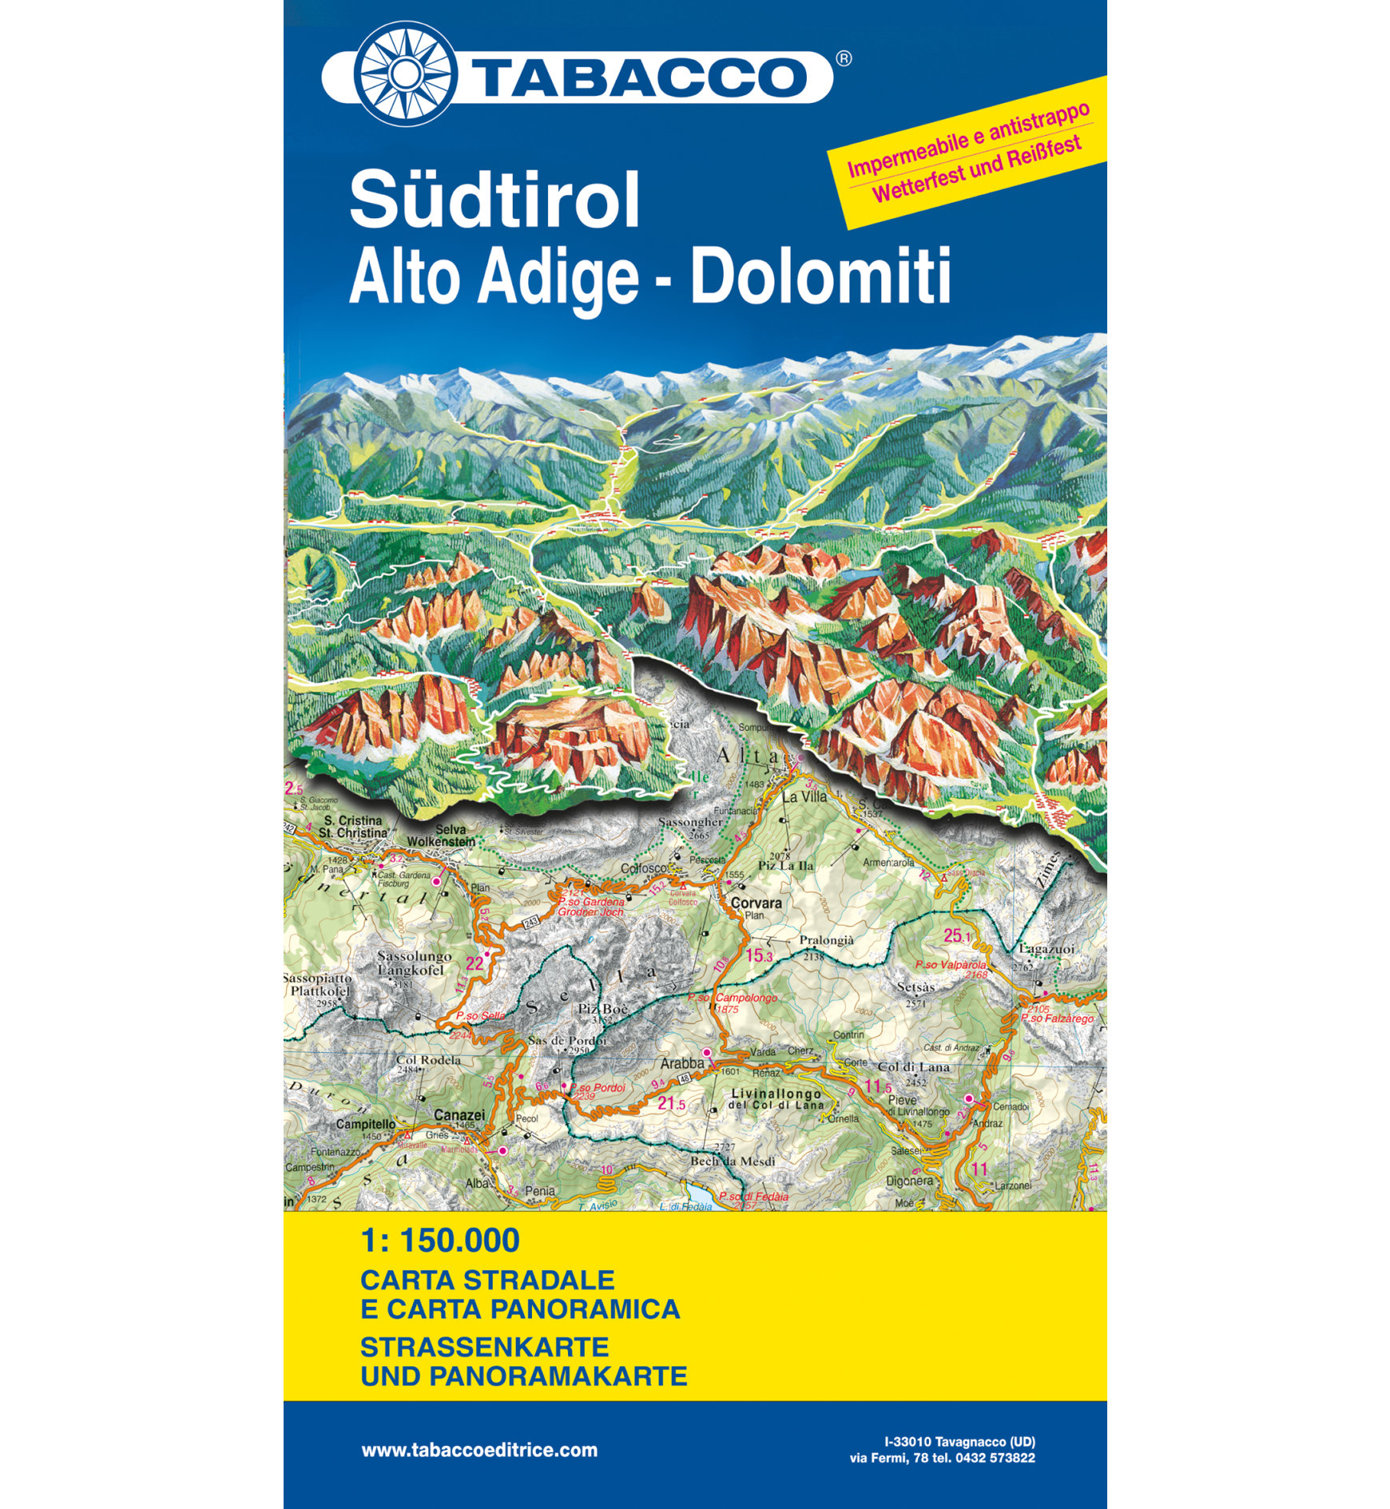 Tabacco Strassenkarte und Panoramakarte Südtirol - 1:150.000 | Sportler.com